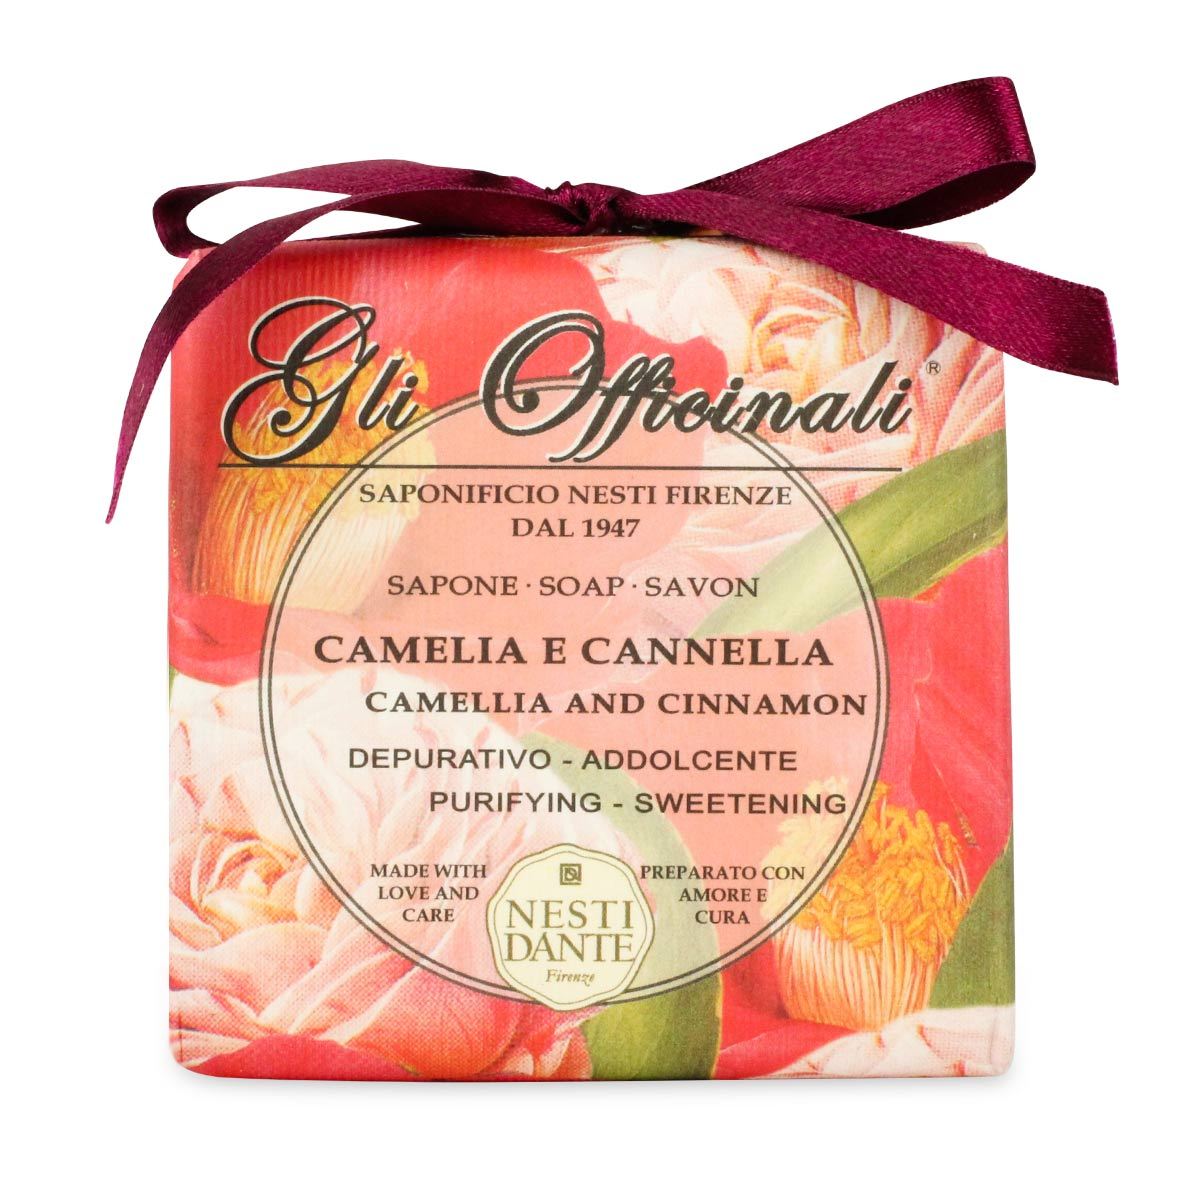 Primary image of Camelia + Cinnamon Soap